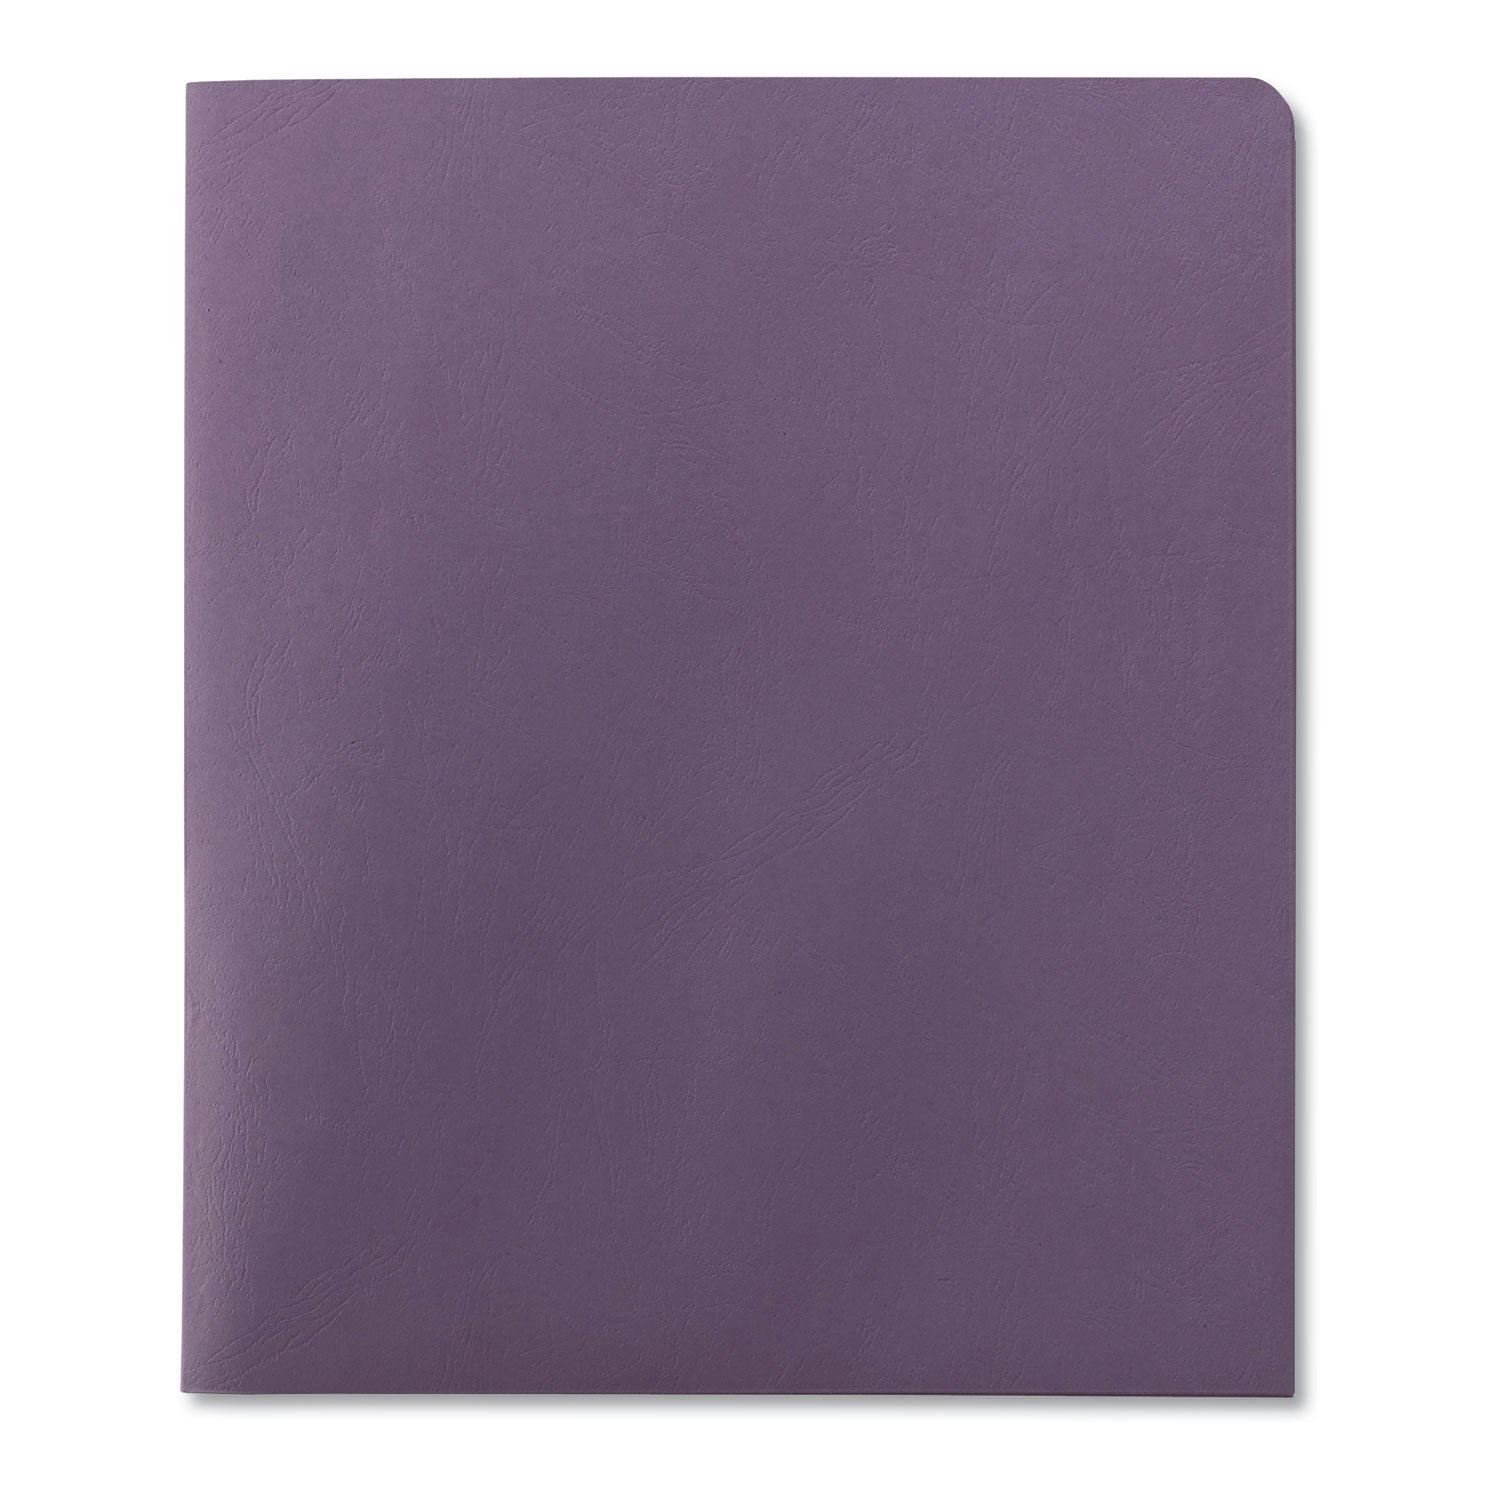 Two-Pocket Folder, Textured Paper, 100-Sheet Capacity, 11 x 8.5, Lavender, 25/Box - 